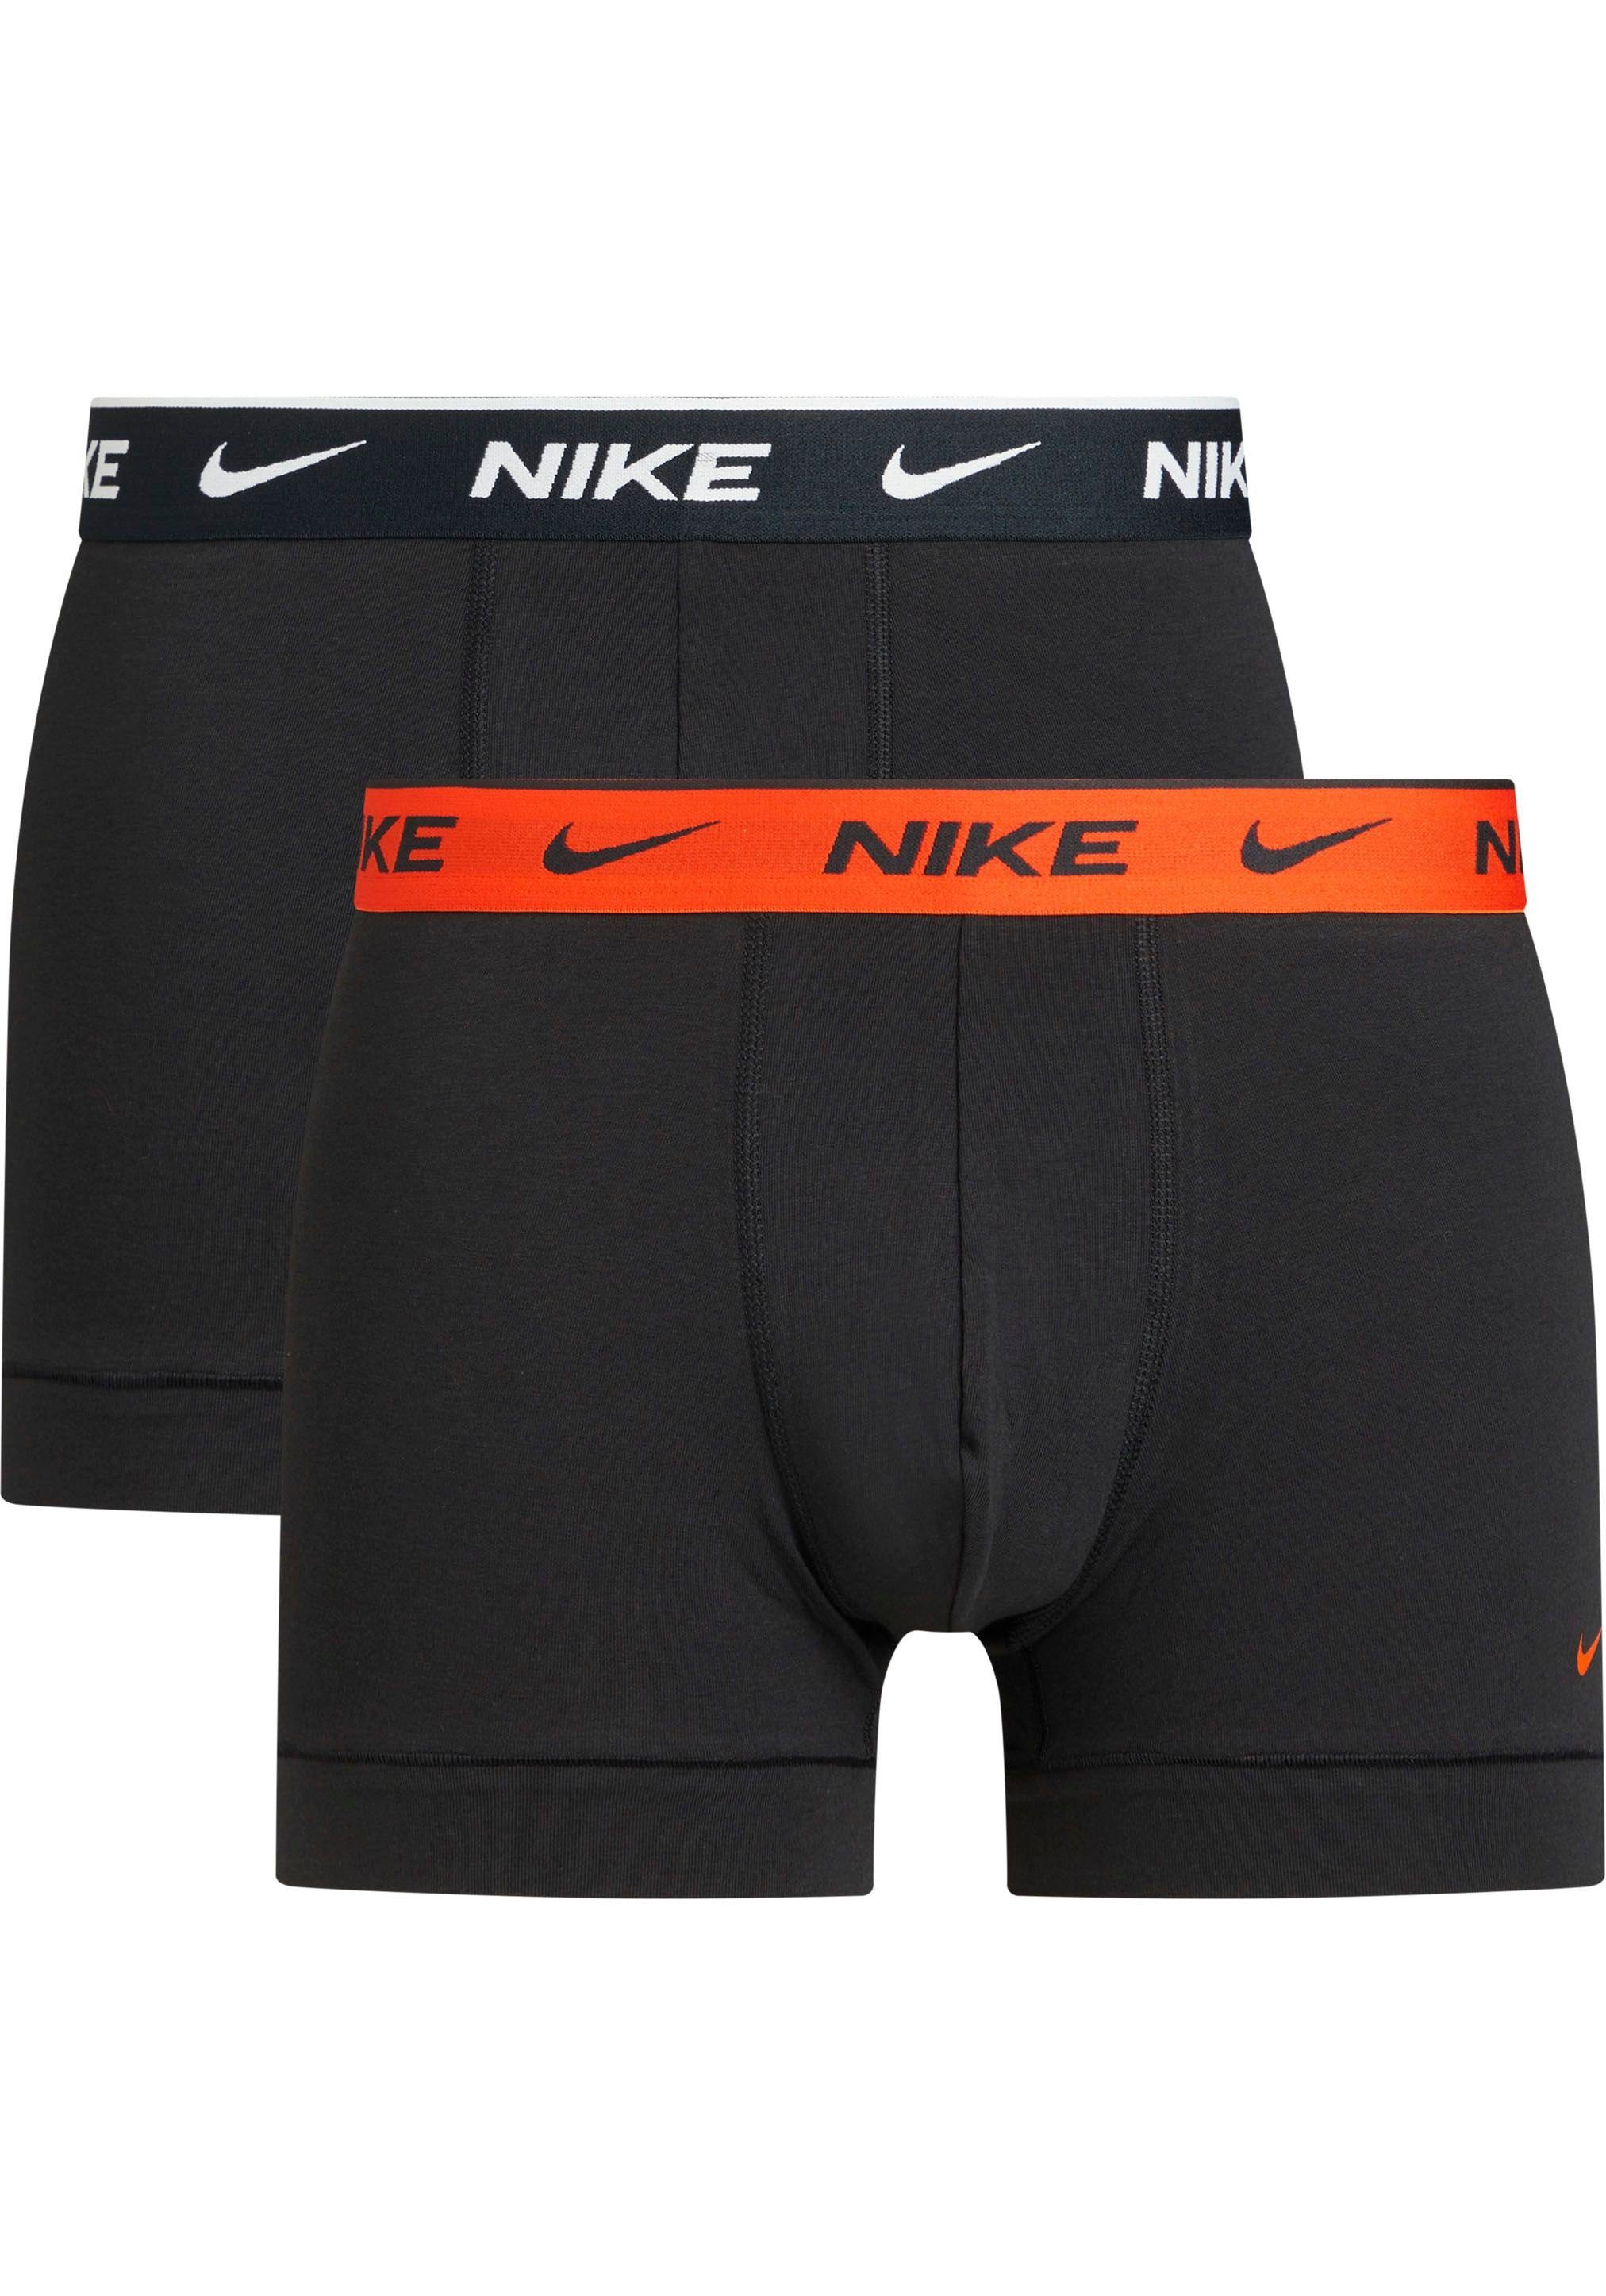 NIKE Underwear Trunk TRUNK 2PK (Packung, 2er-Pack) mit NIKE Logo-Elastikbund (2 Stück) BLACK/_TEAM_ORANGE_WB